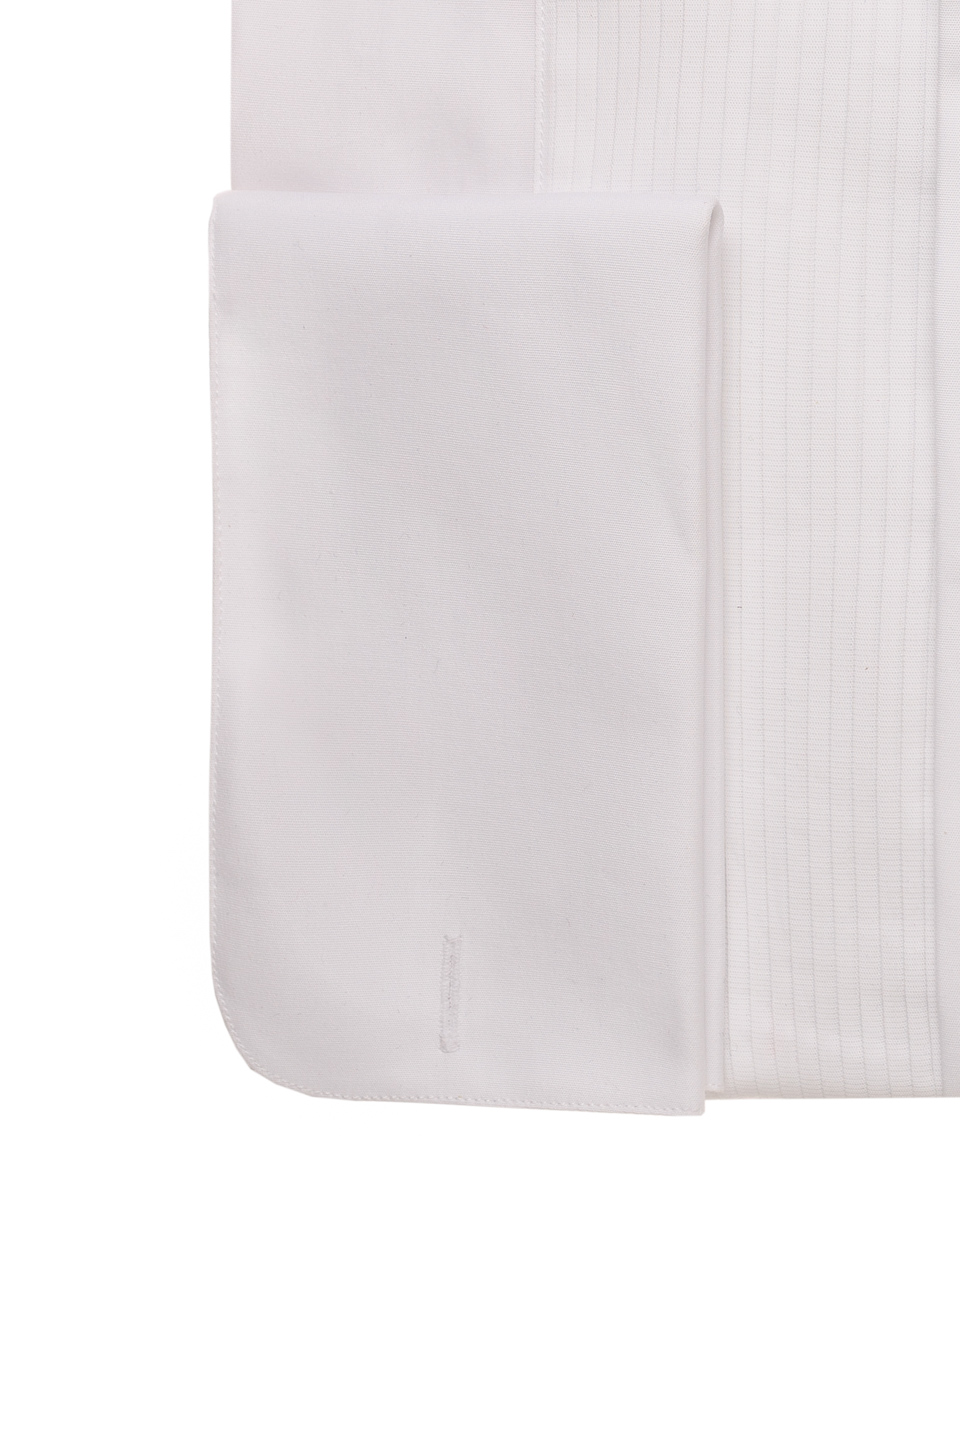 Webster White Dress Shirt - Double Cuff